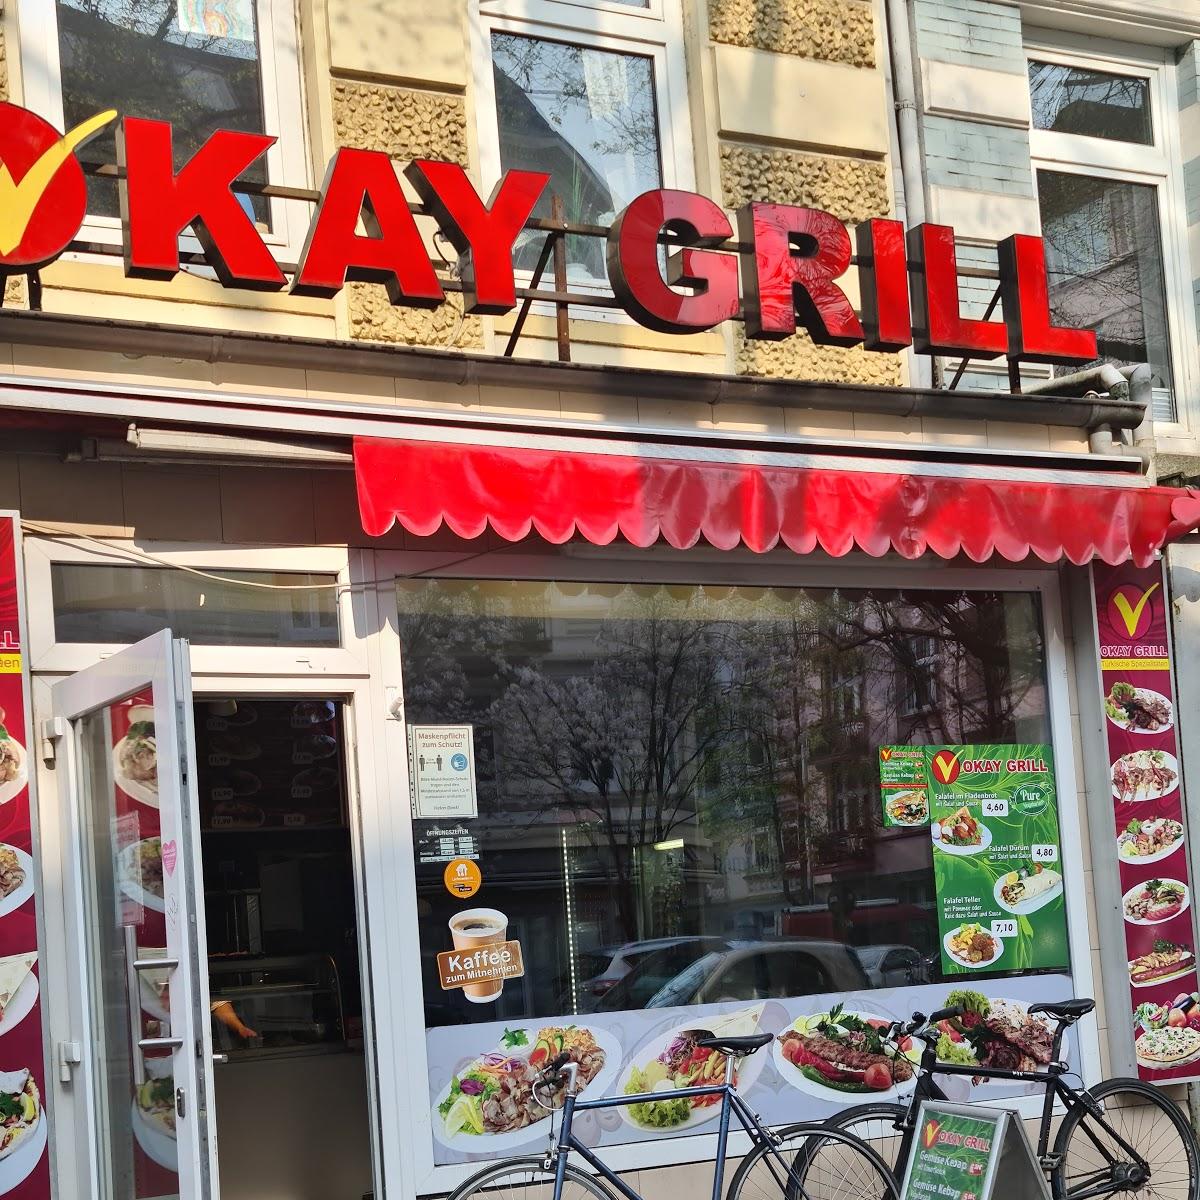 Restaurant "Okay GRILL" in Hamburg